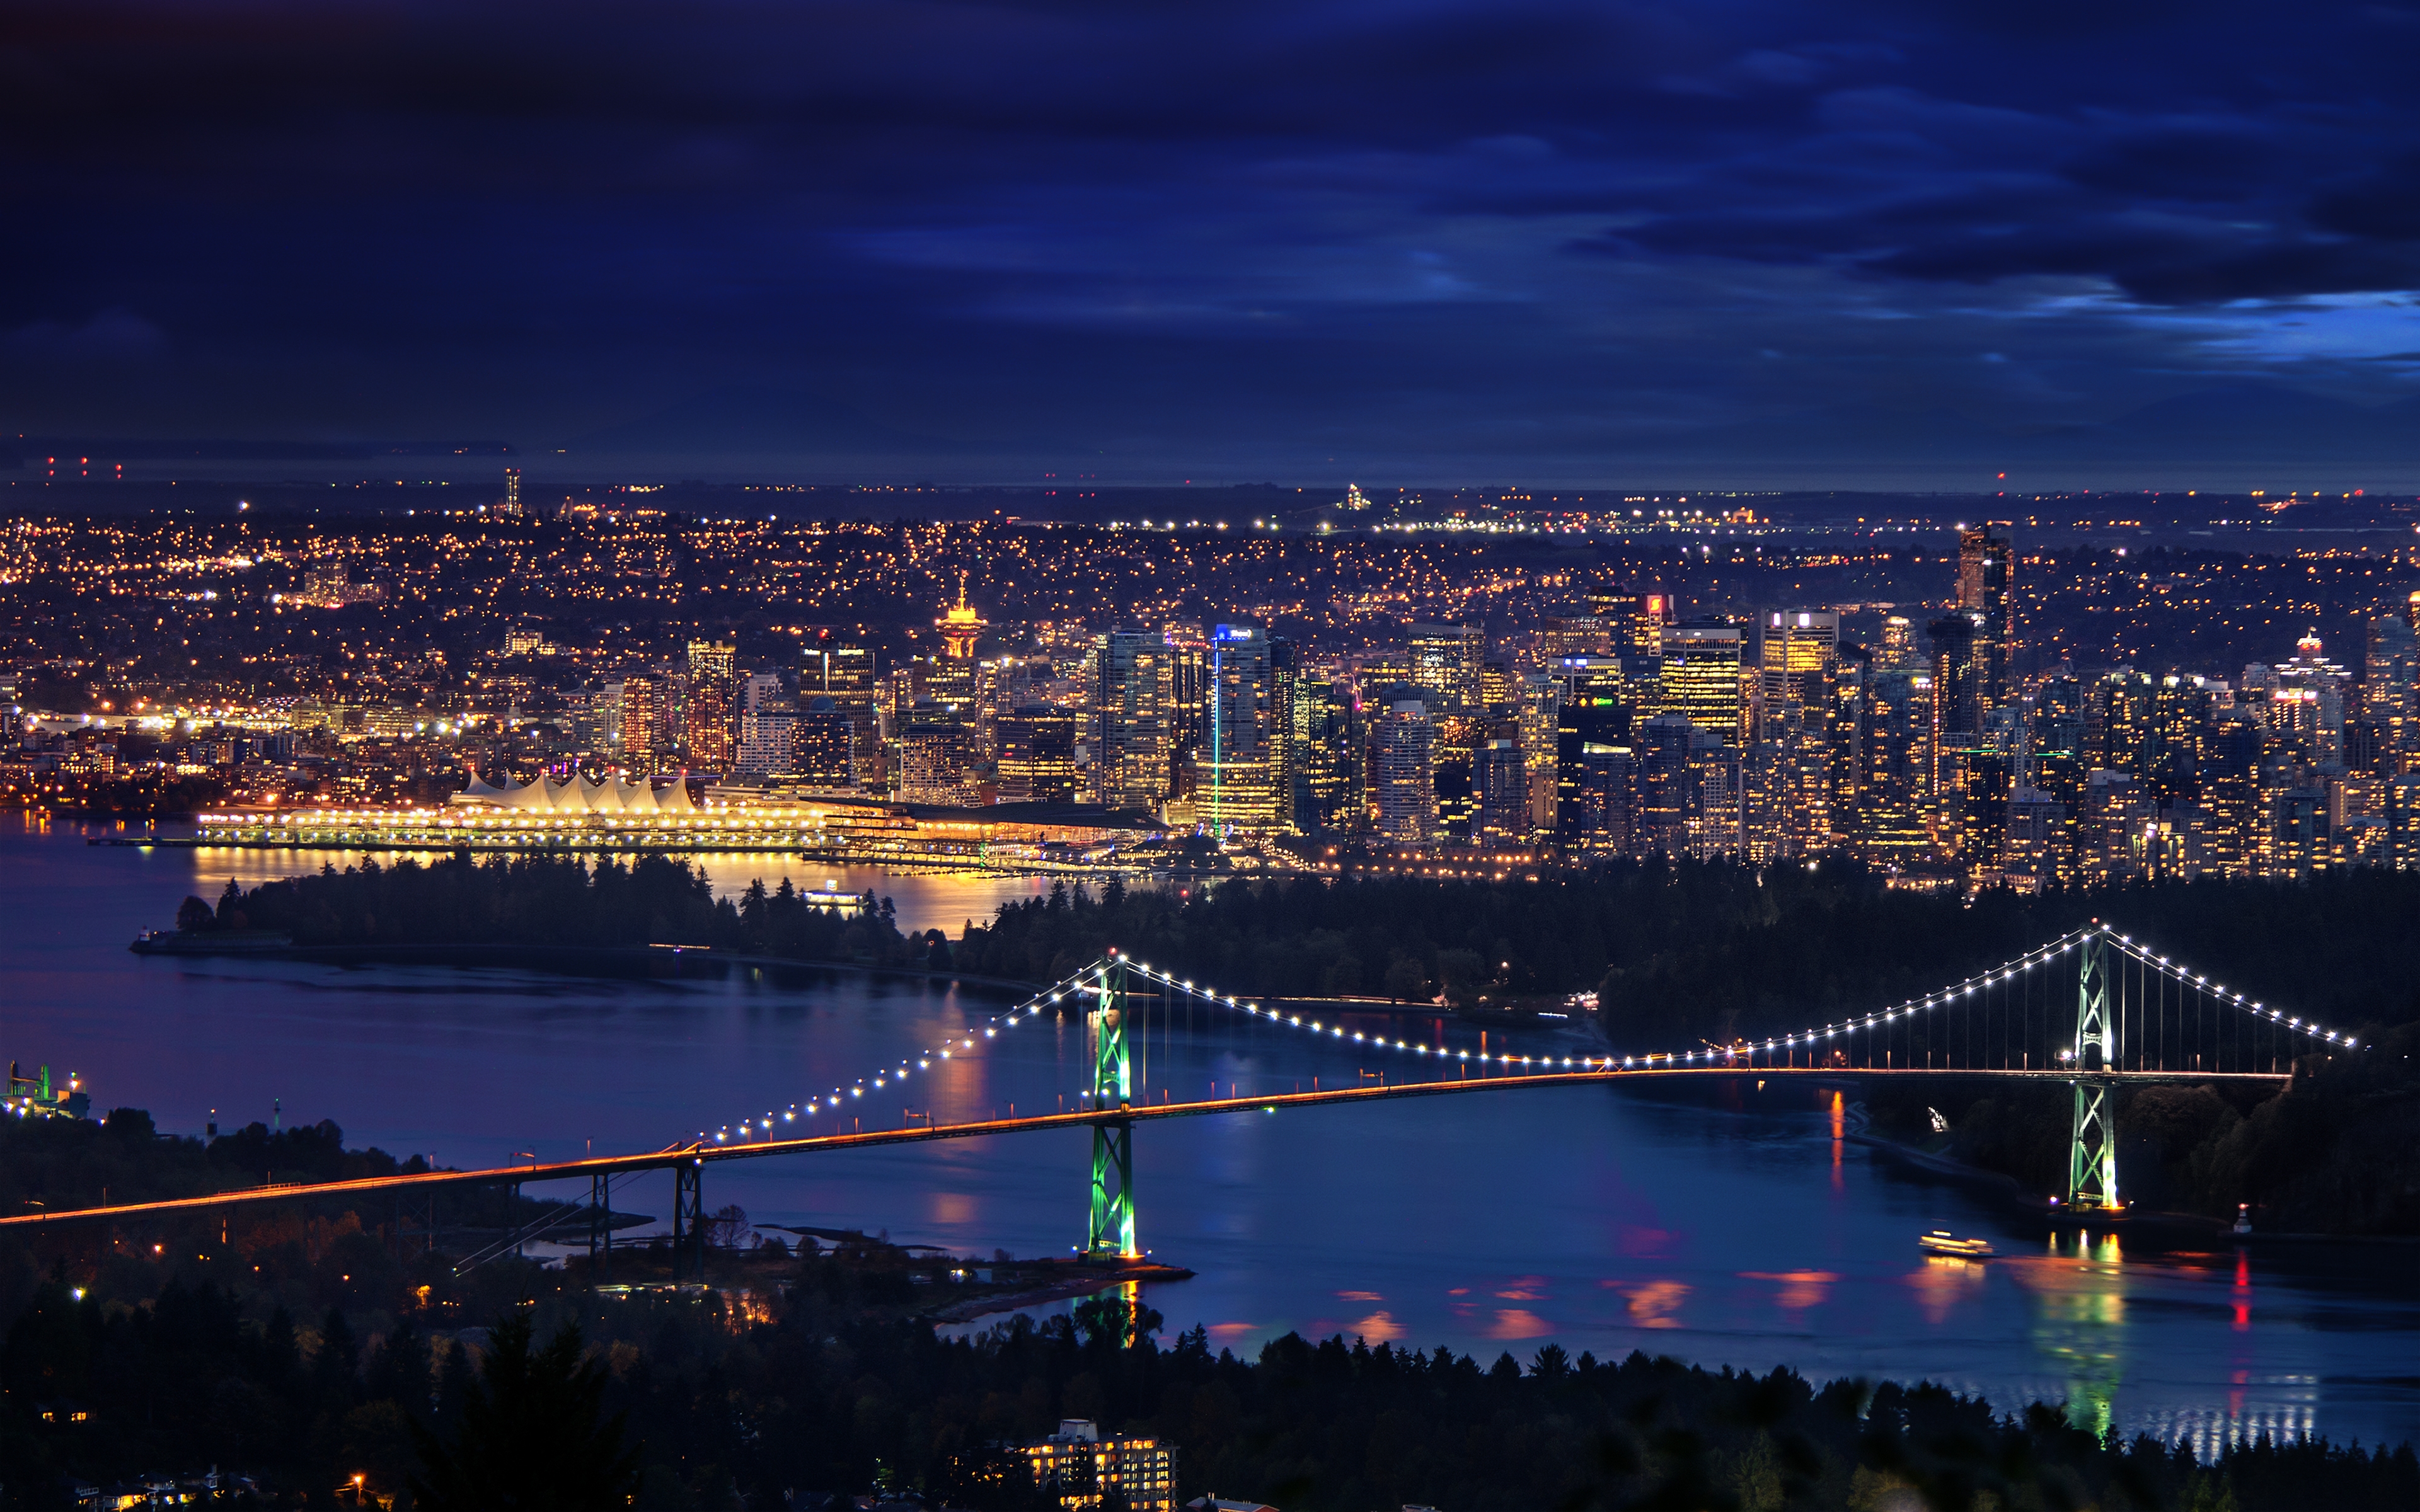 HD wallpaper, Night Time, Long Exposure, Cityscape, Canada, Horizon, Suspension Bridge, Vancouver City, Dark Sky, City Lights, Lions Gate Bridge